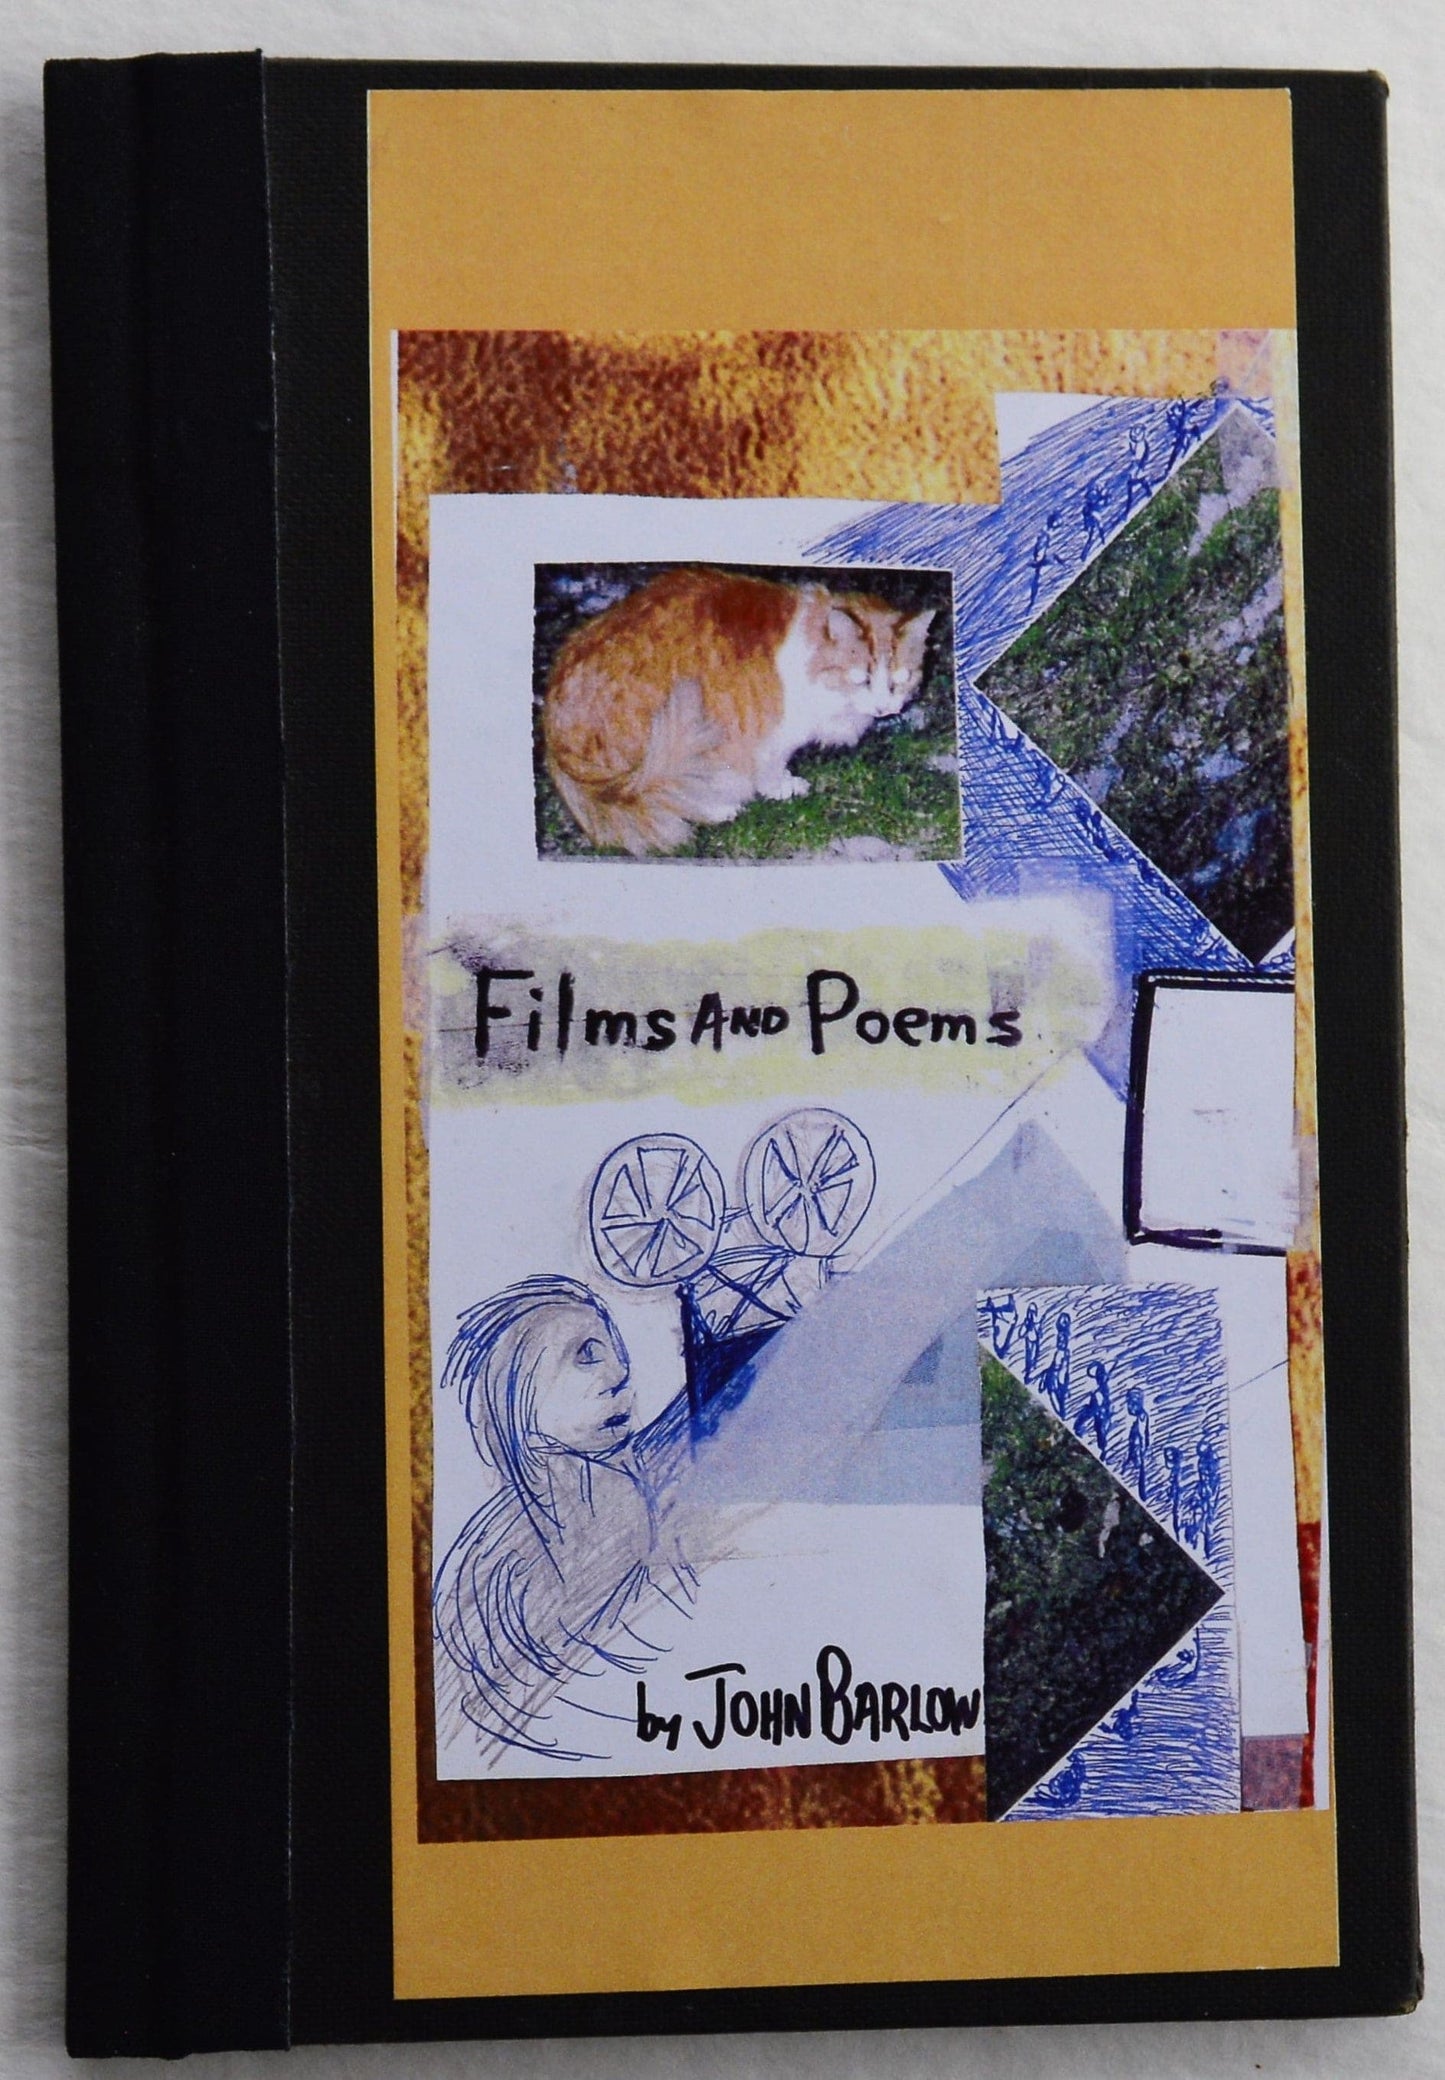 Films And Poems - John Barlow